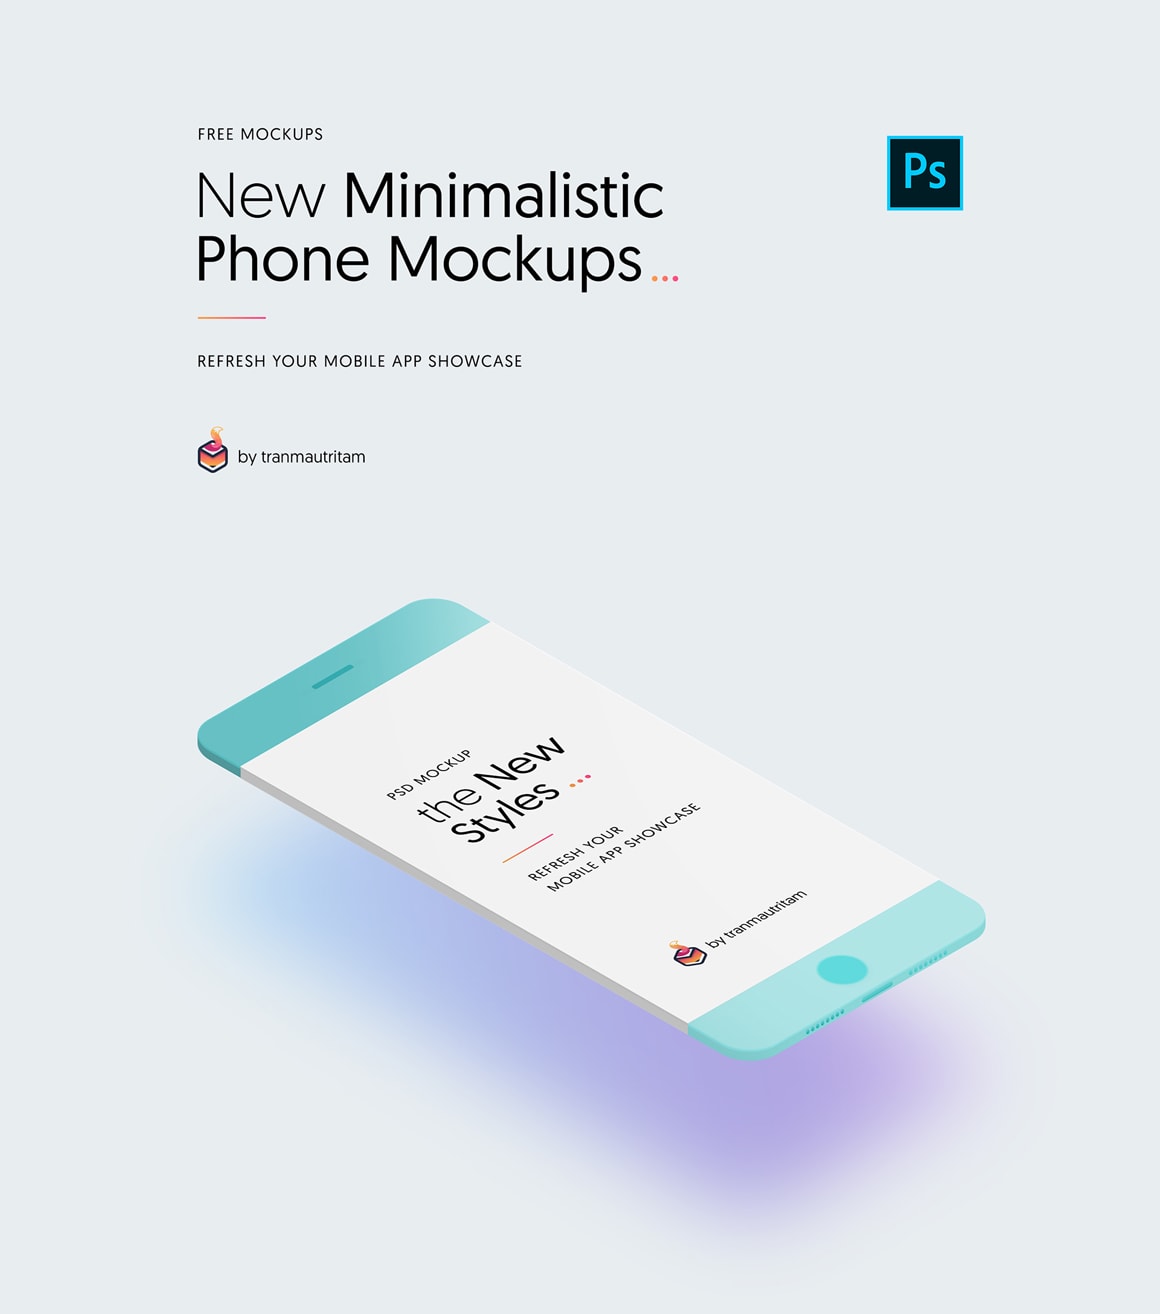 Free Minimalistic Phone Mockups